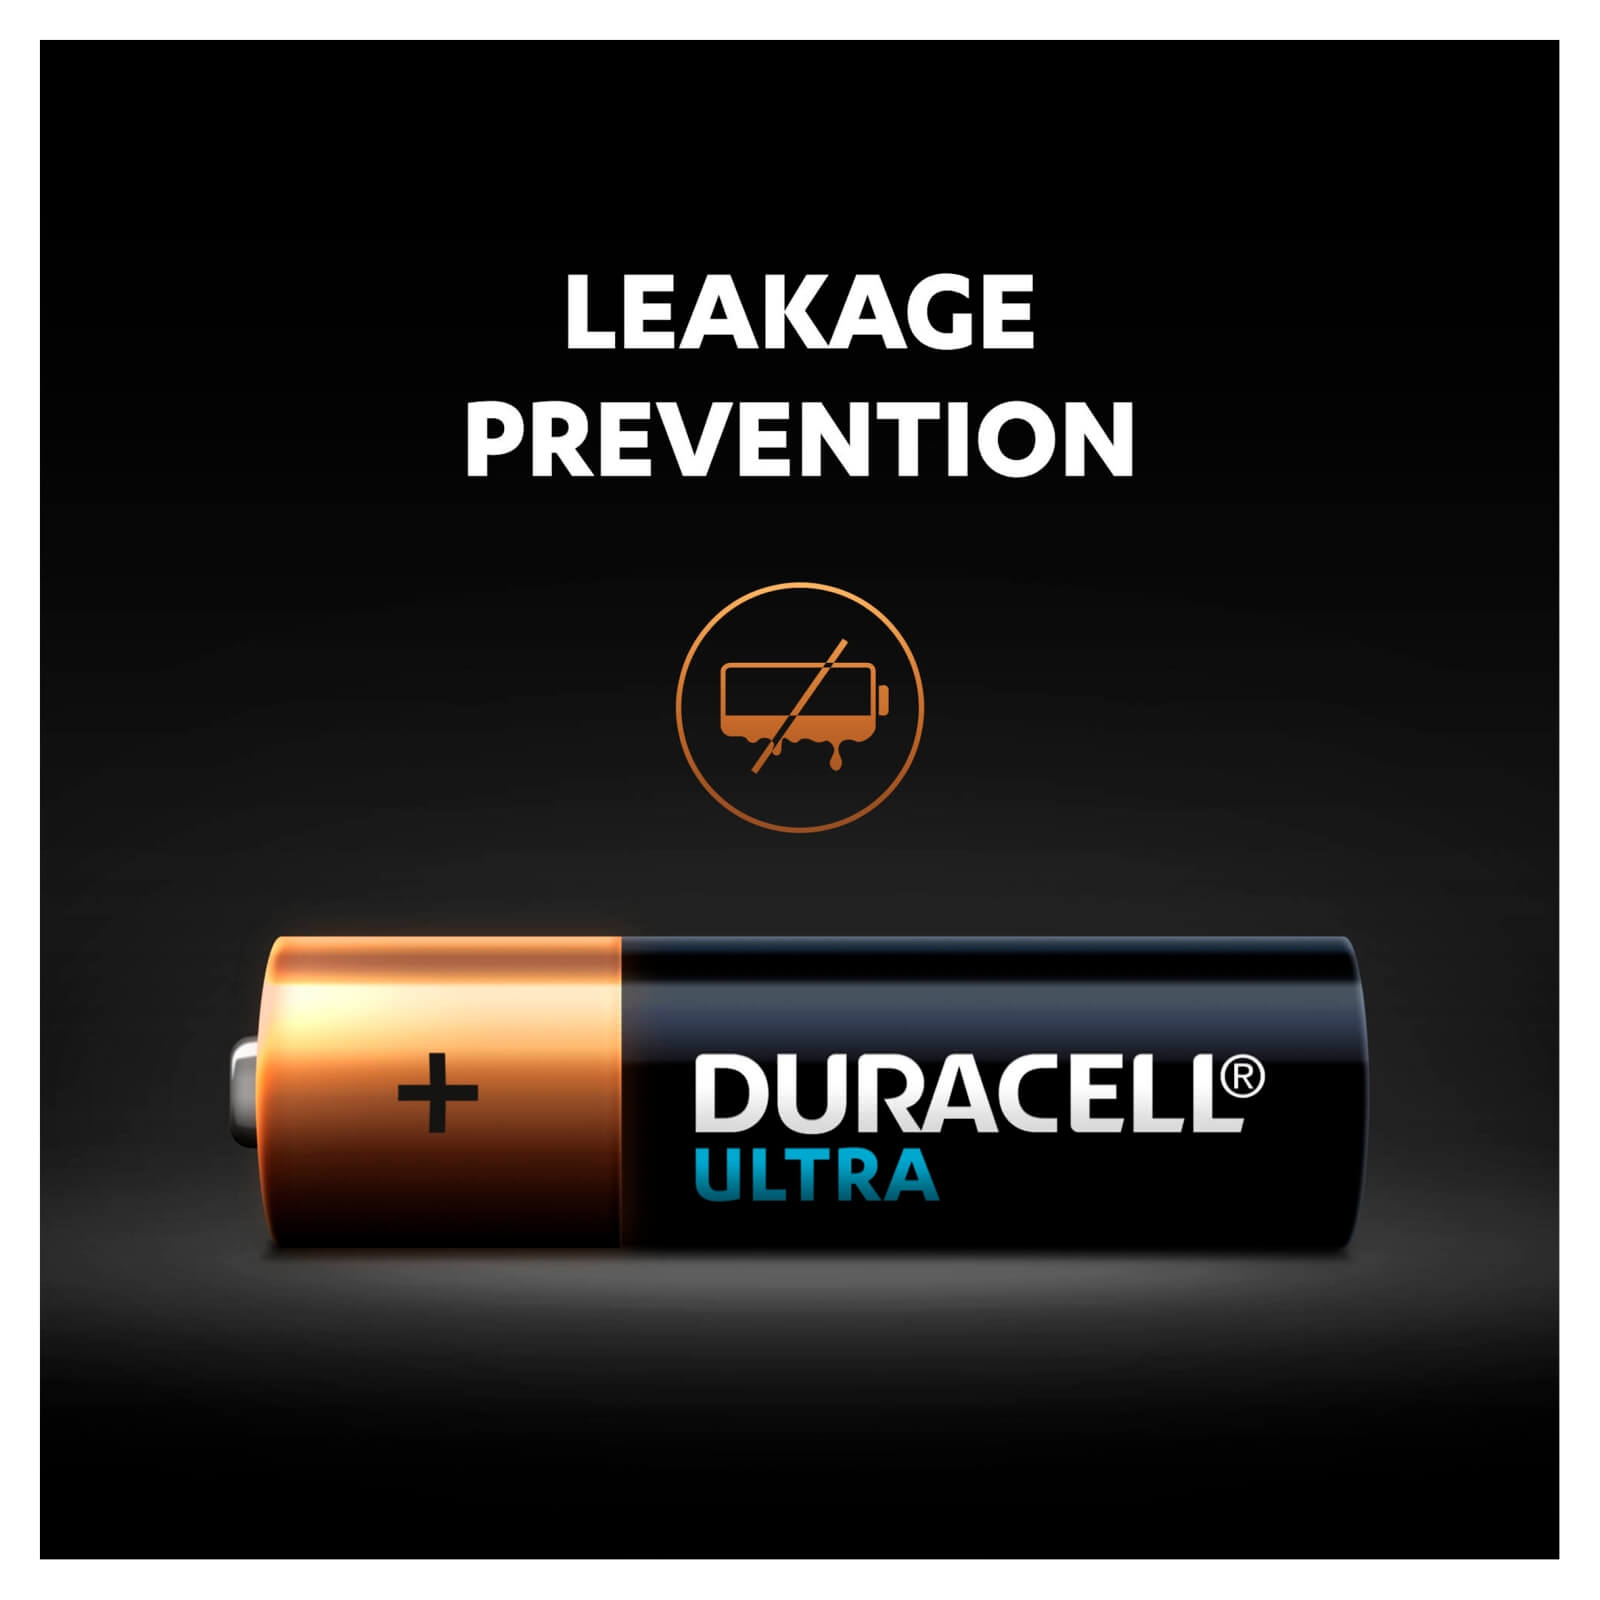 Duracell Ultra AA Batteries - 8 Pack